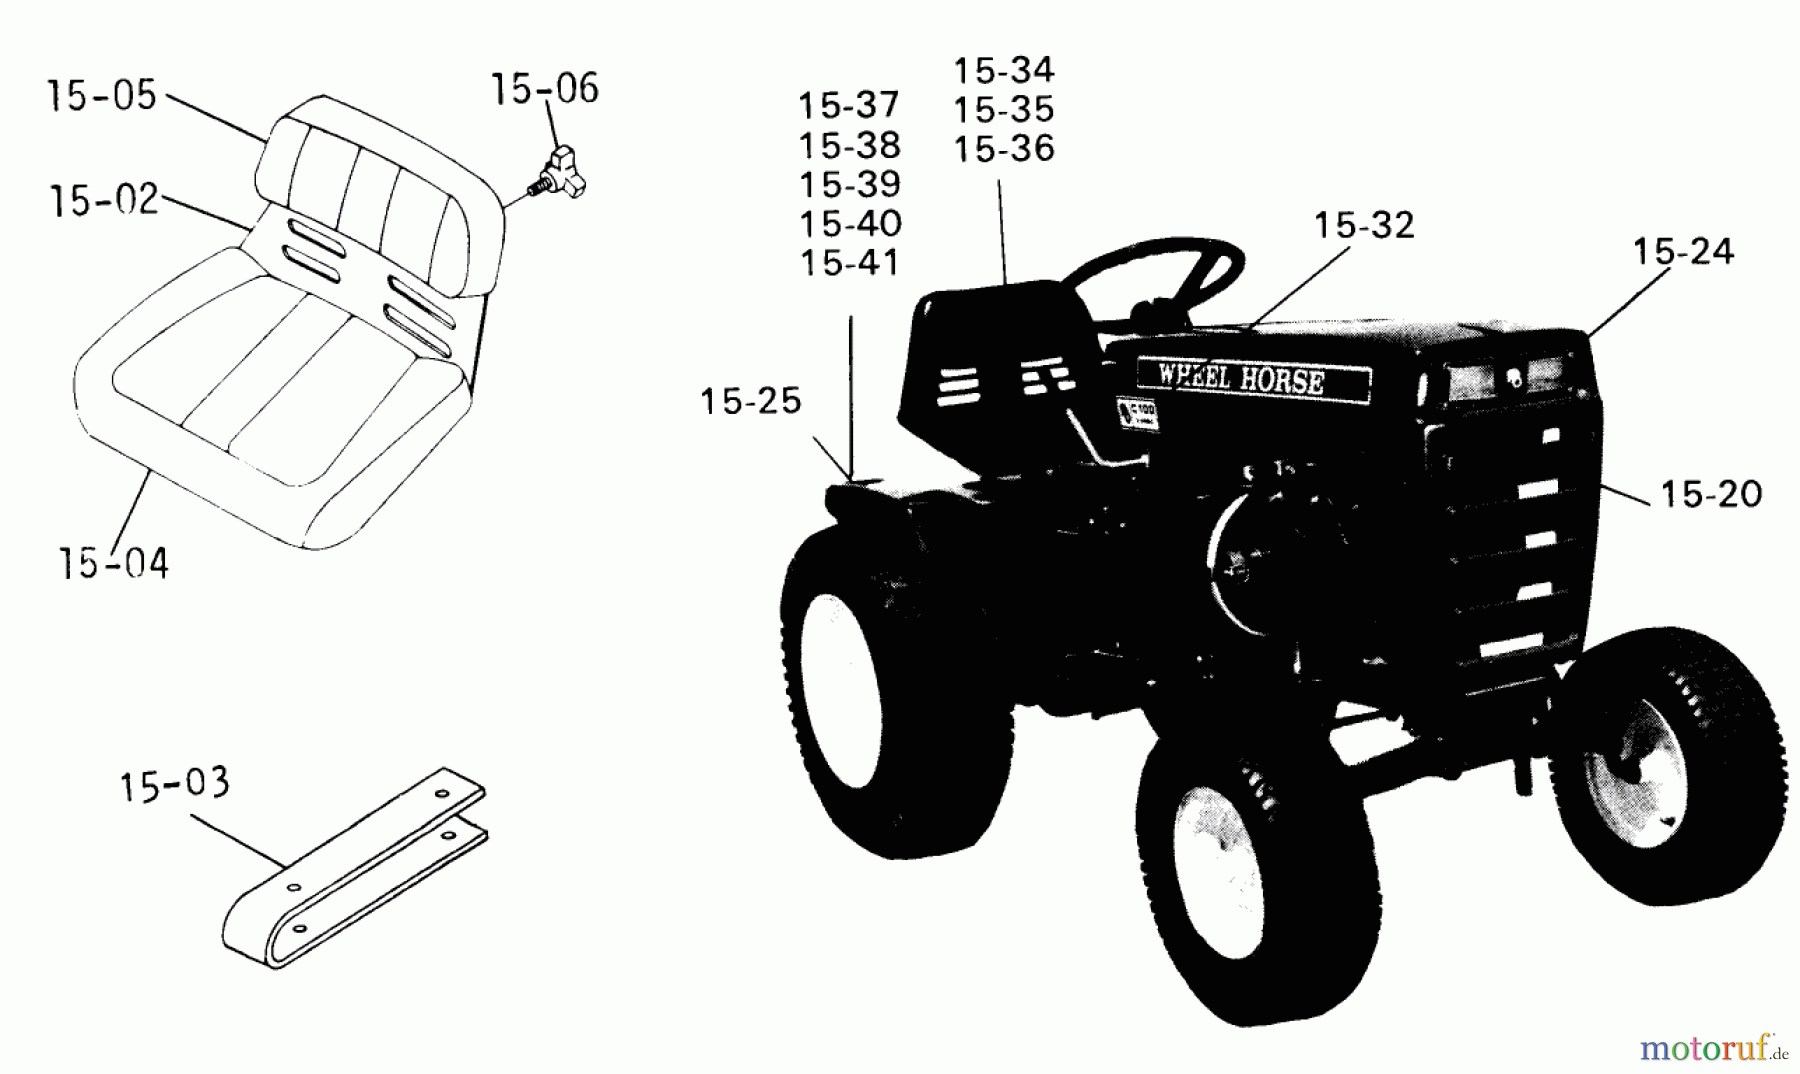  Toro Neu Mowers, Lawn & Garden Tractor Seite 1 1-0356 (C-120) - Toro C-120 8-Speed Tractor, 1974 SEATS, DECALS, MISC. TRIM